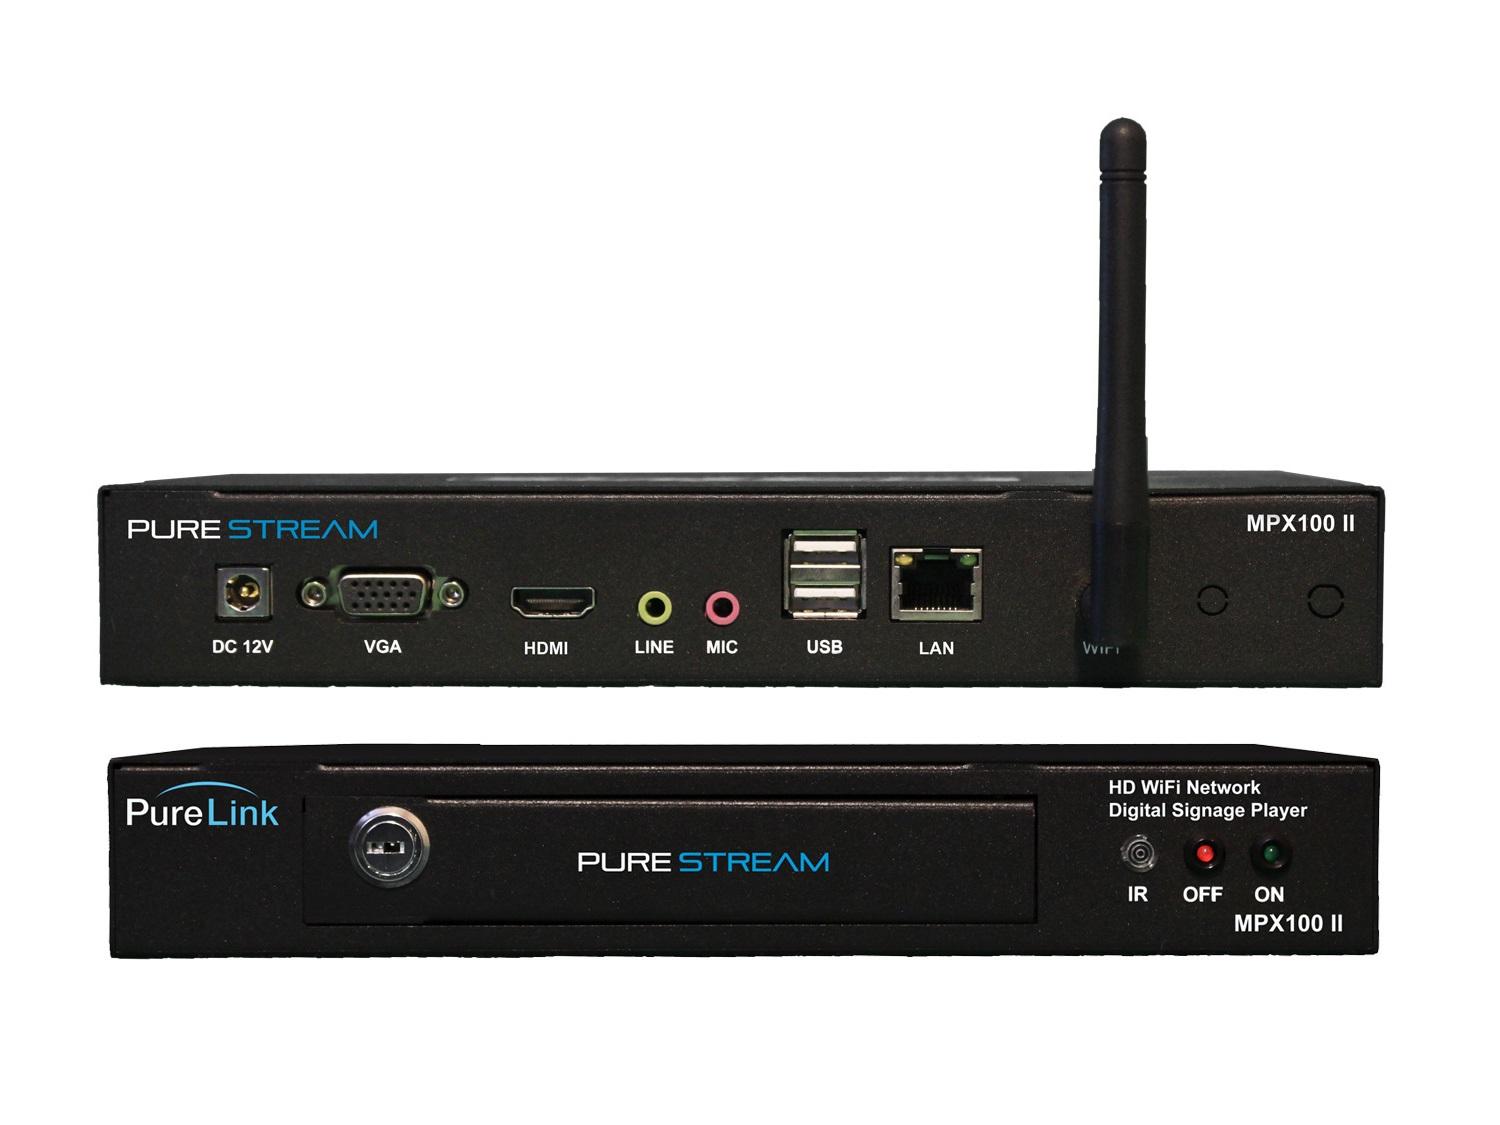 MPX100 II HD WiFi Network Digital Signage Player by PureLink